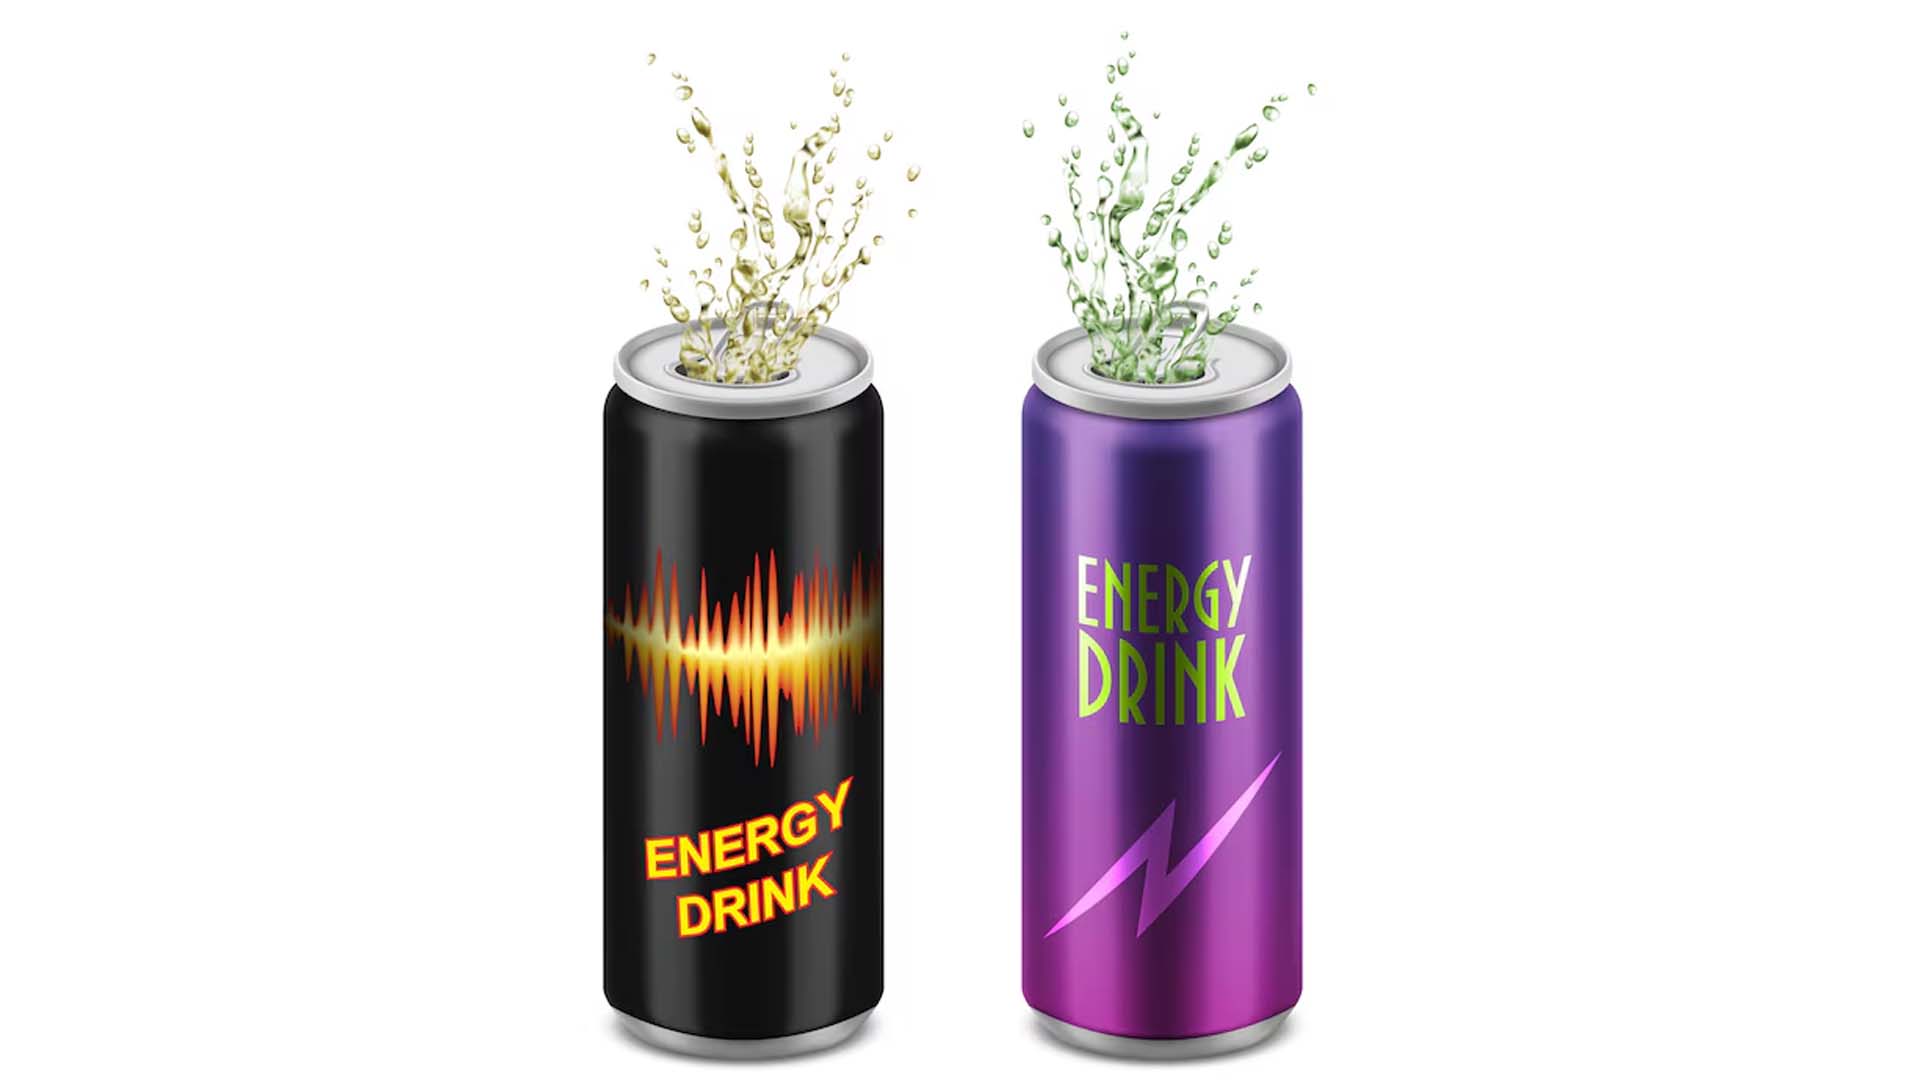 Energy Drinks